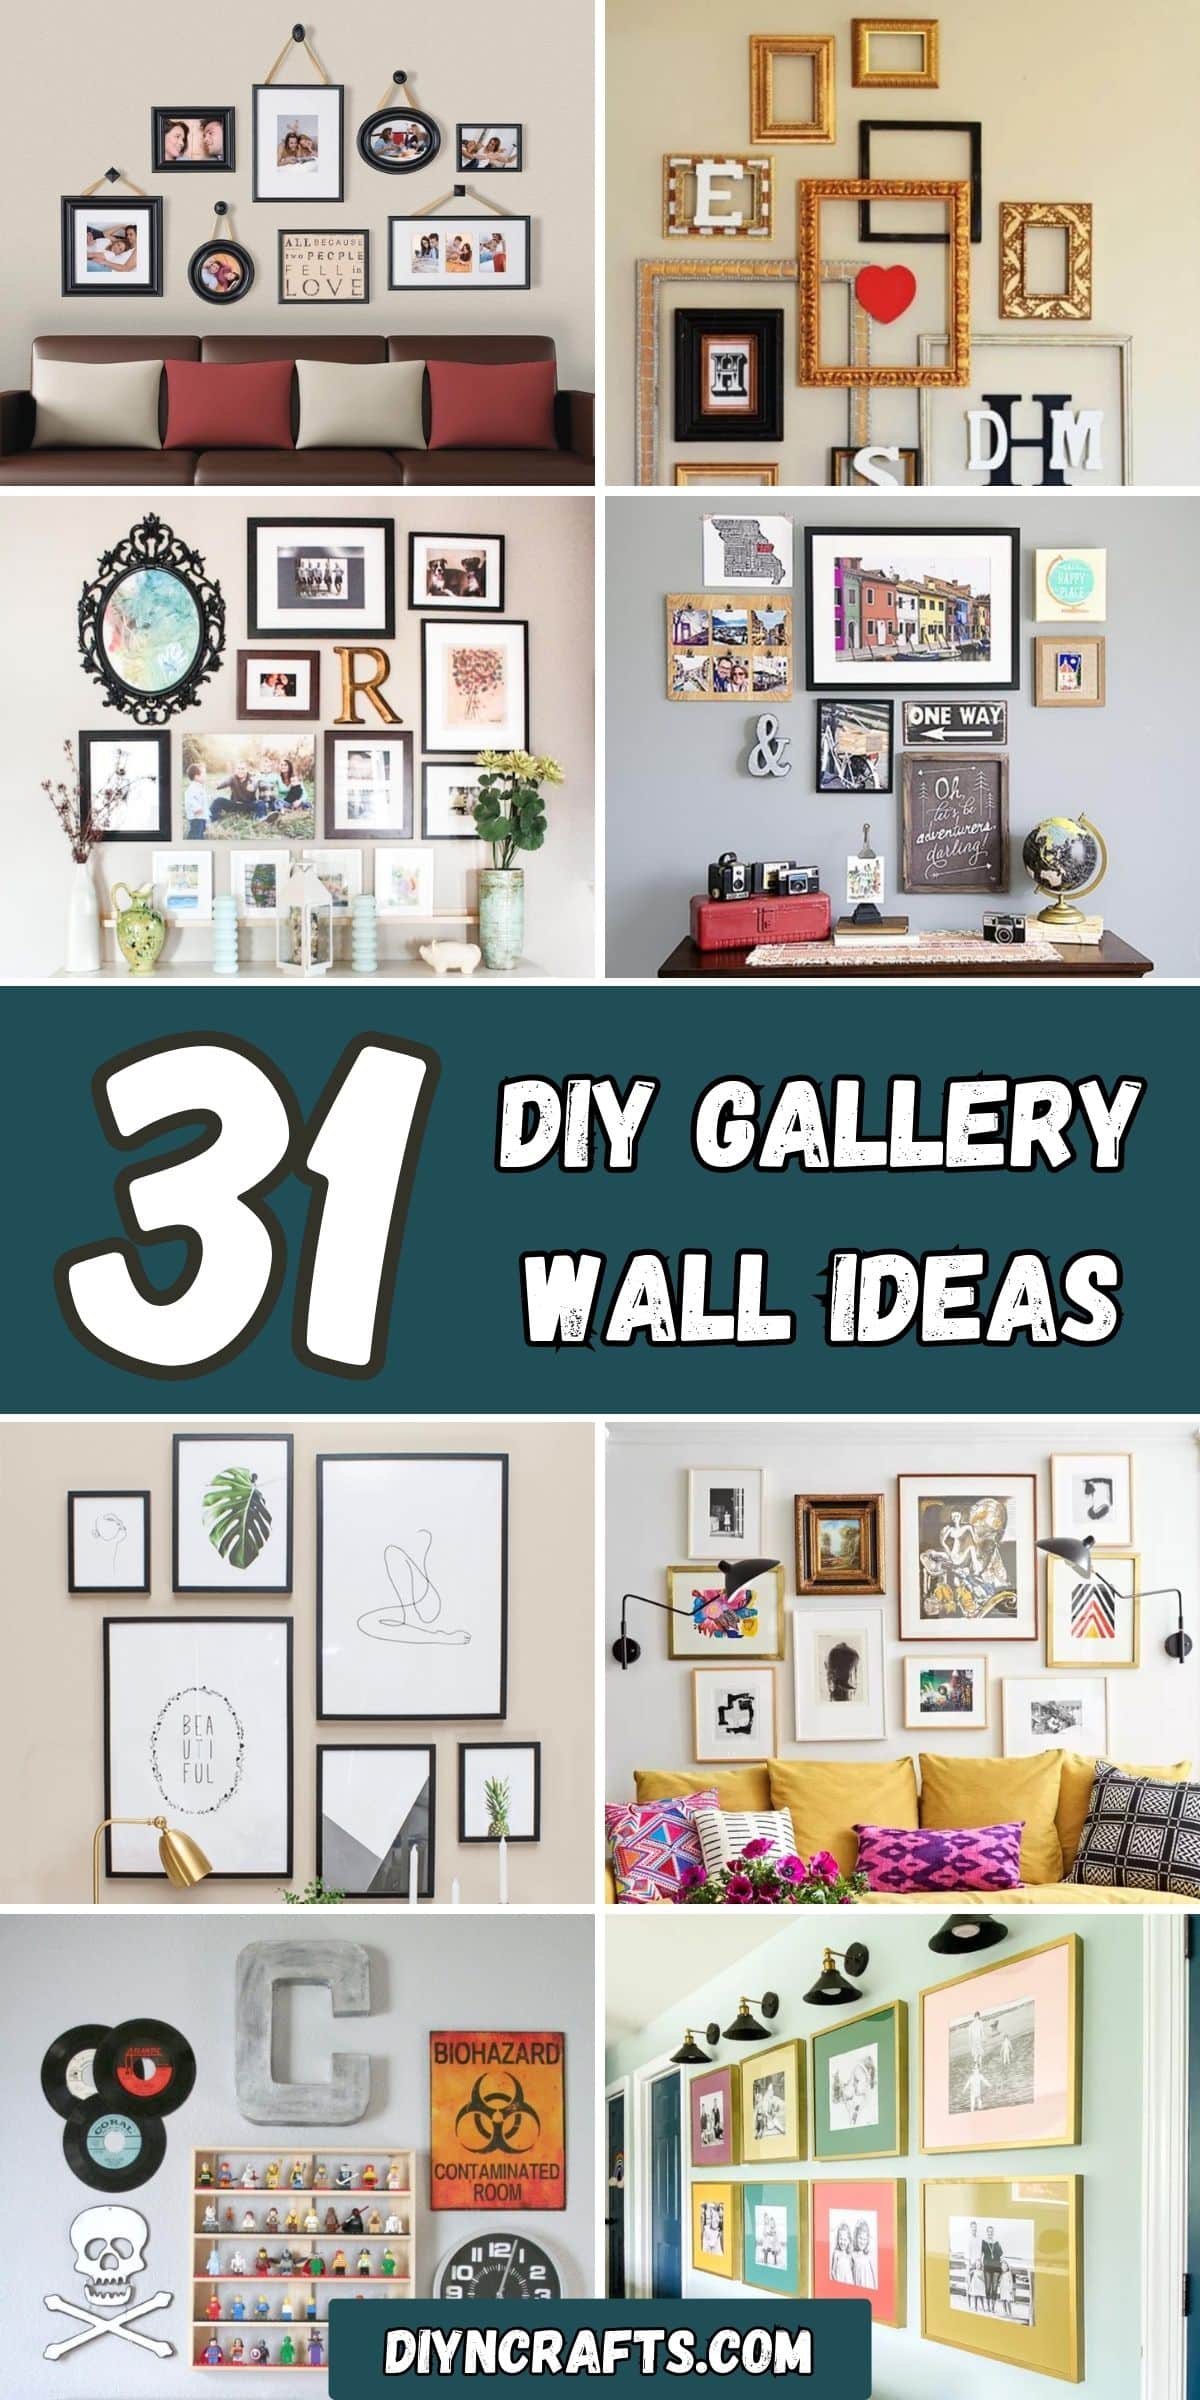 31 DIY Gallery Wall Ideas collage.